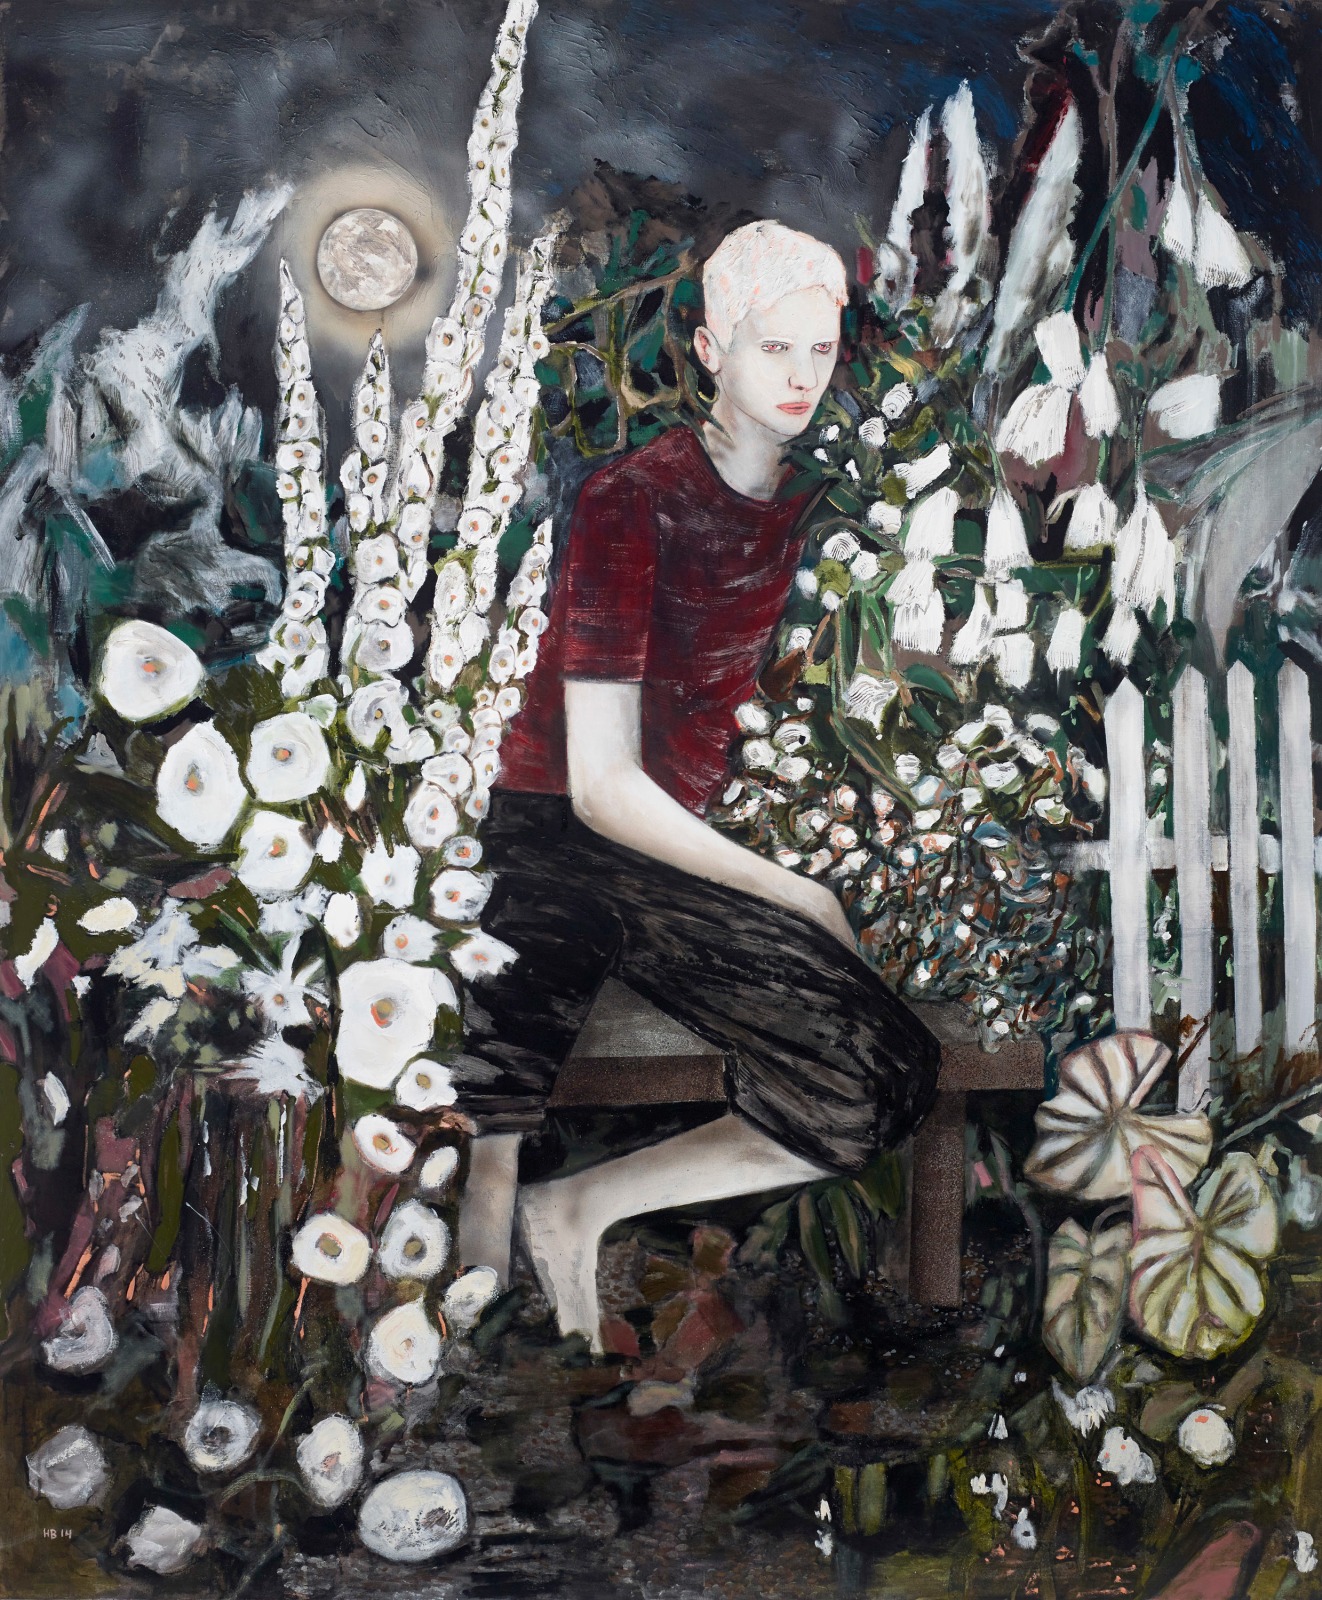 HERNAN BAS, Albino in a moonlight garden, 2014